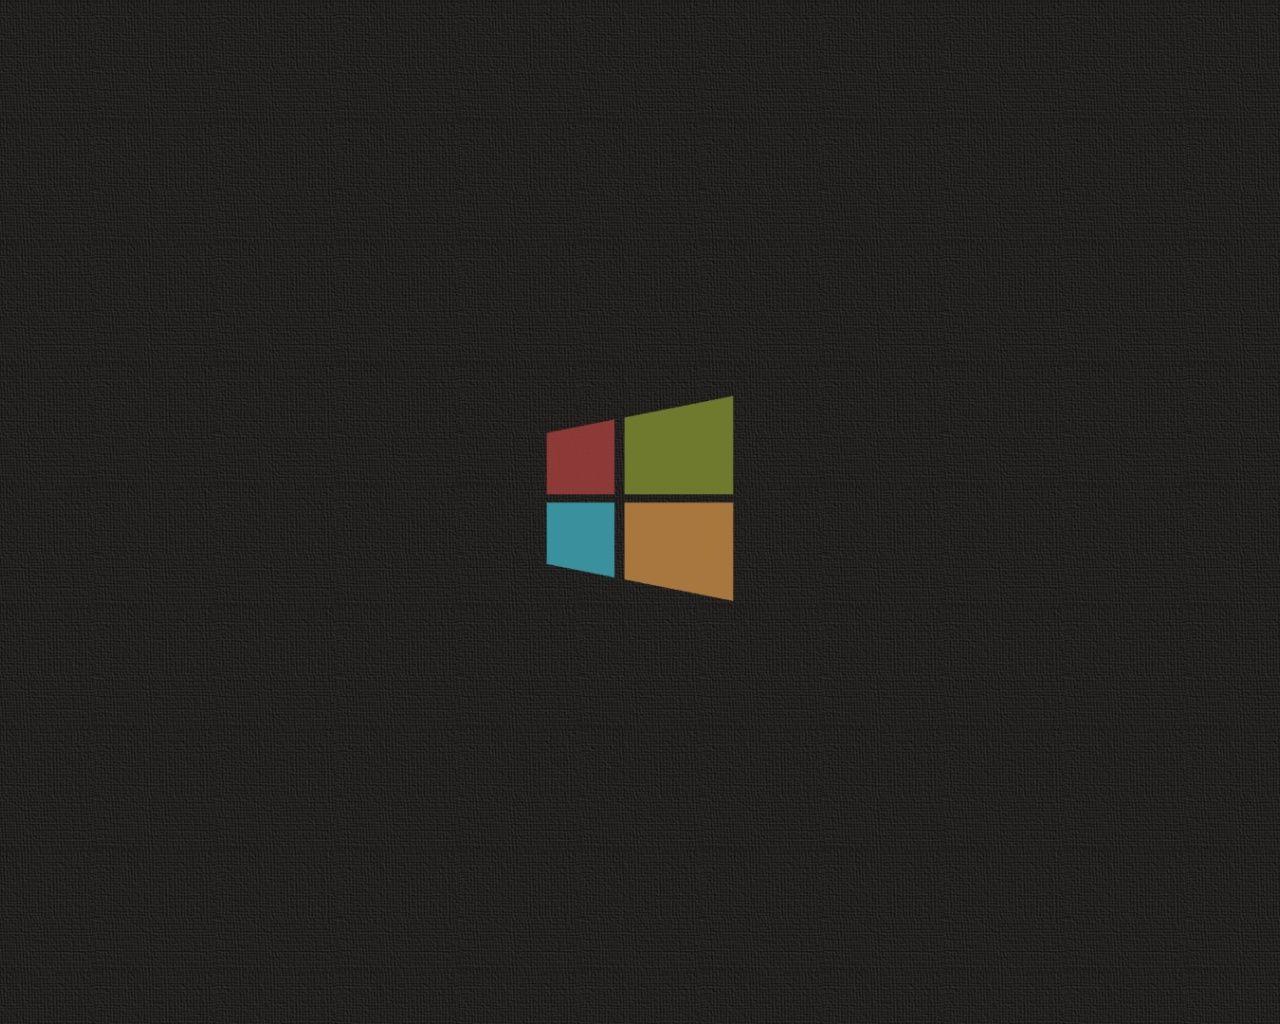 Simple Windows 8 Background desktop PC and Mac wallpaper